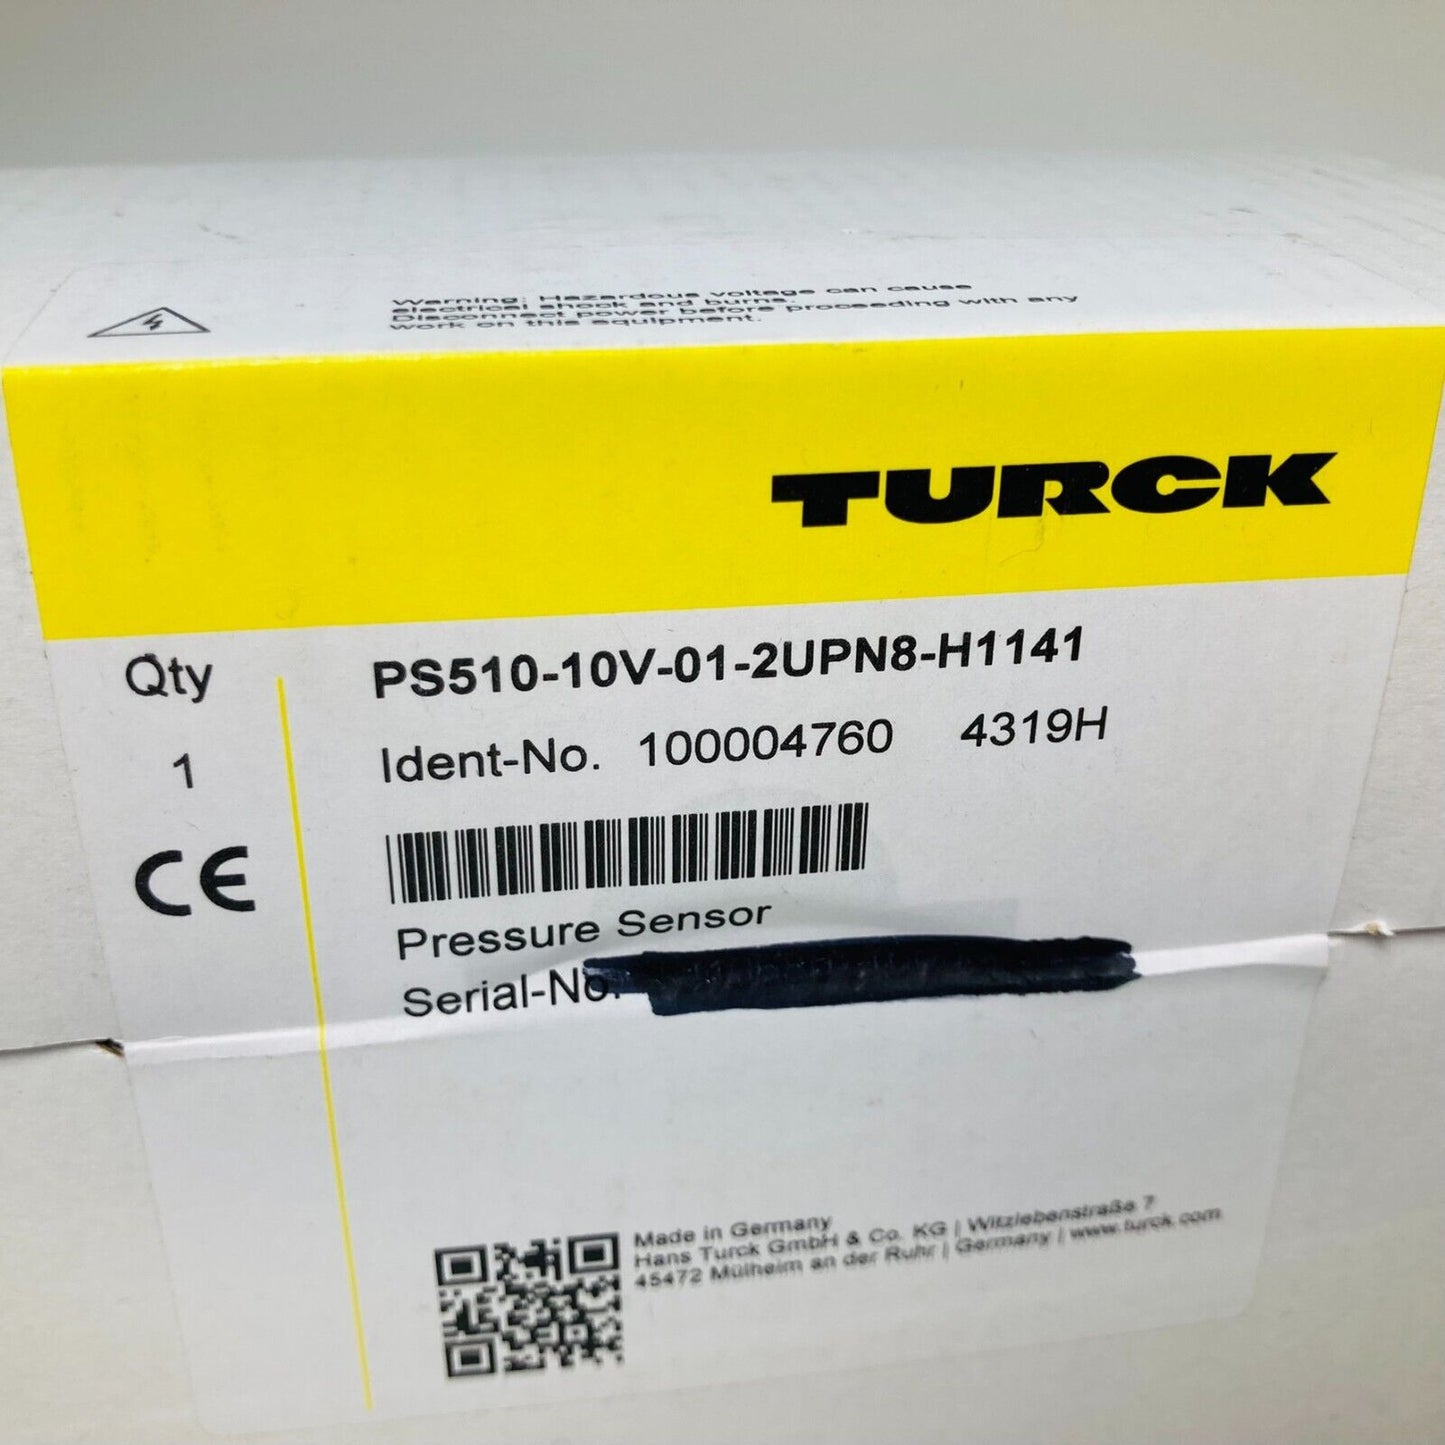 Turck PS510-10V-01-2UPN8-H1141 / 100004760 Pressure Sensor, NEW